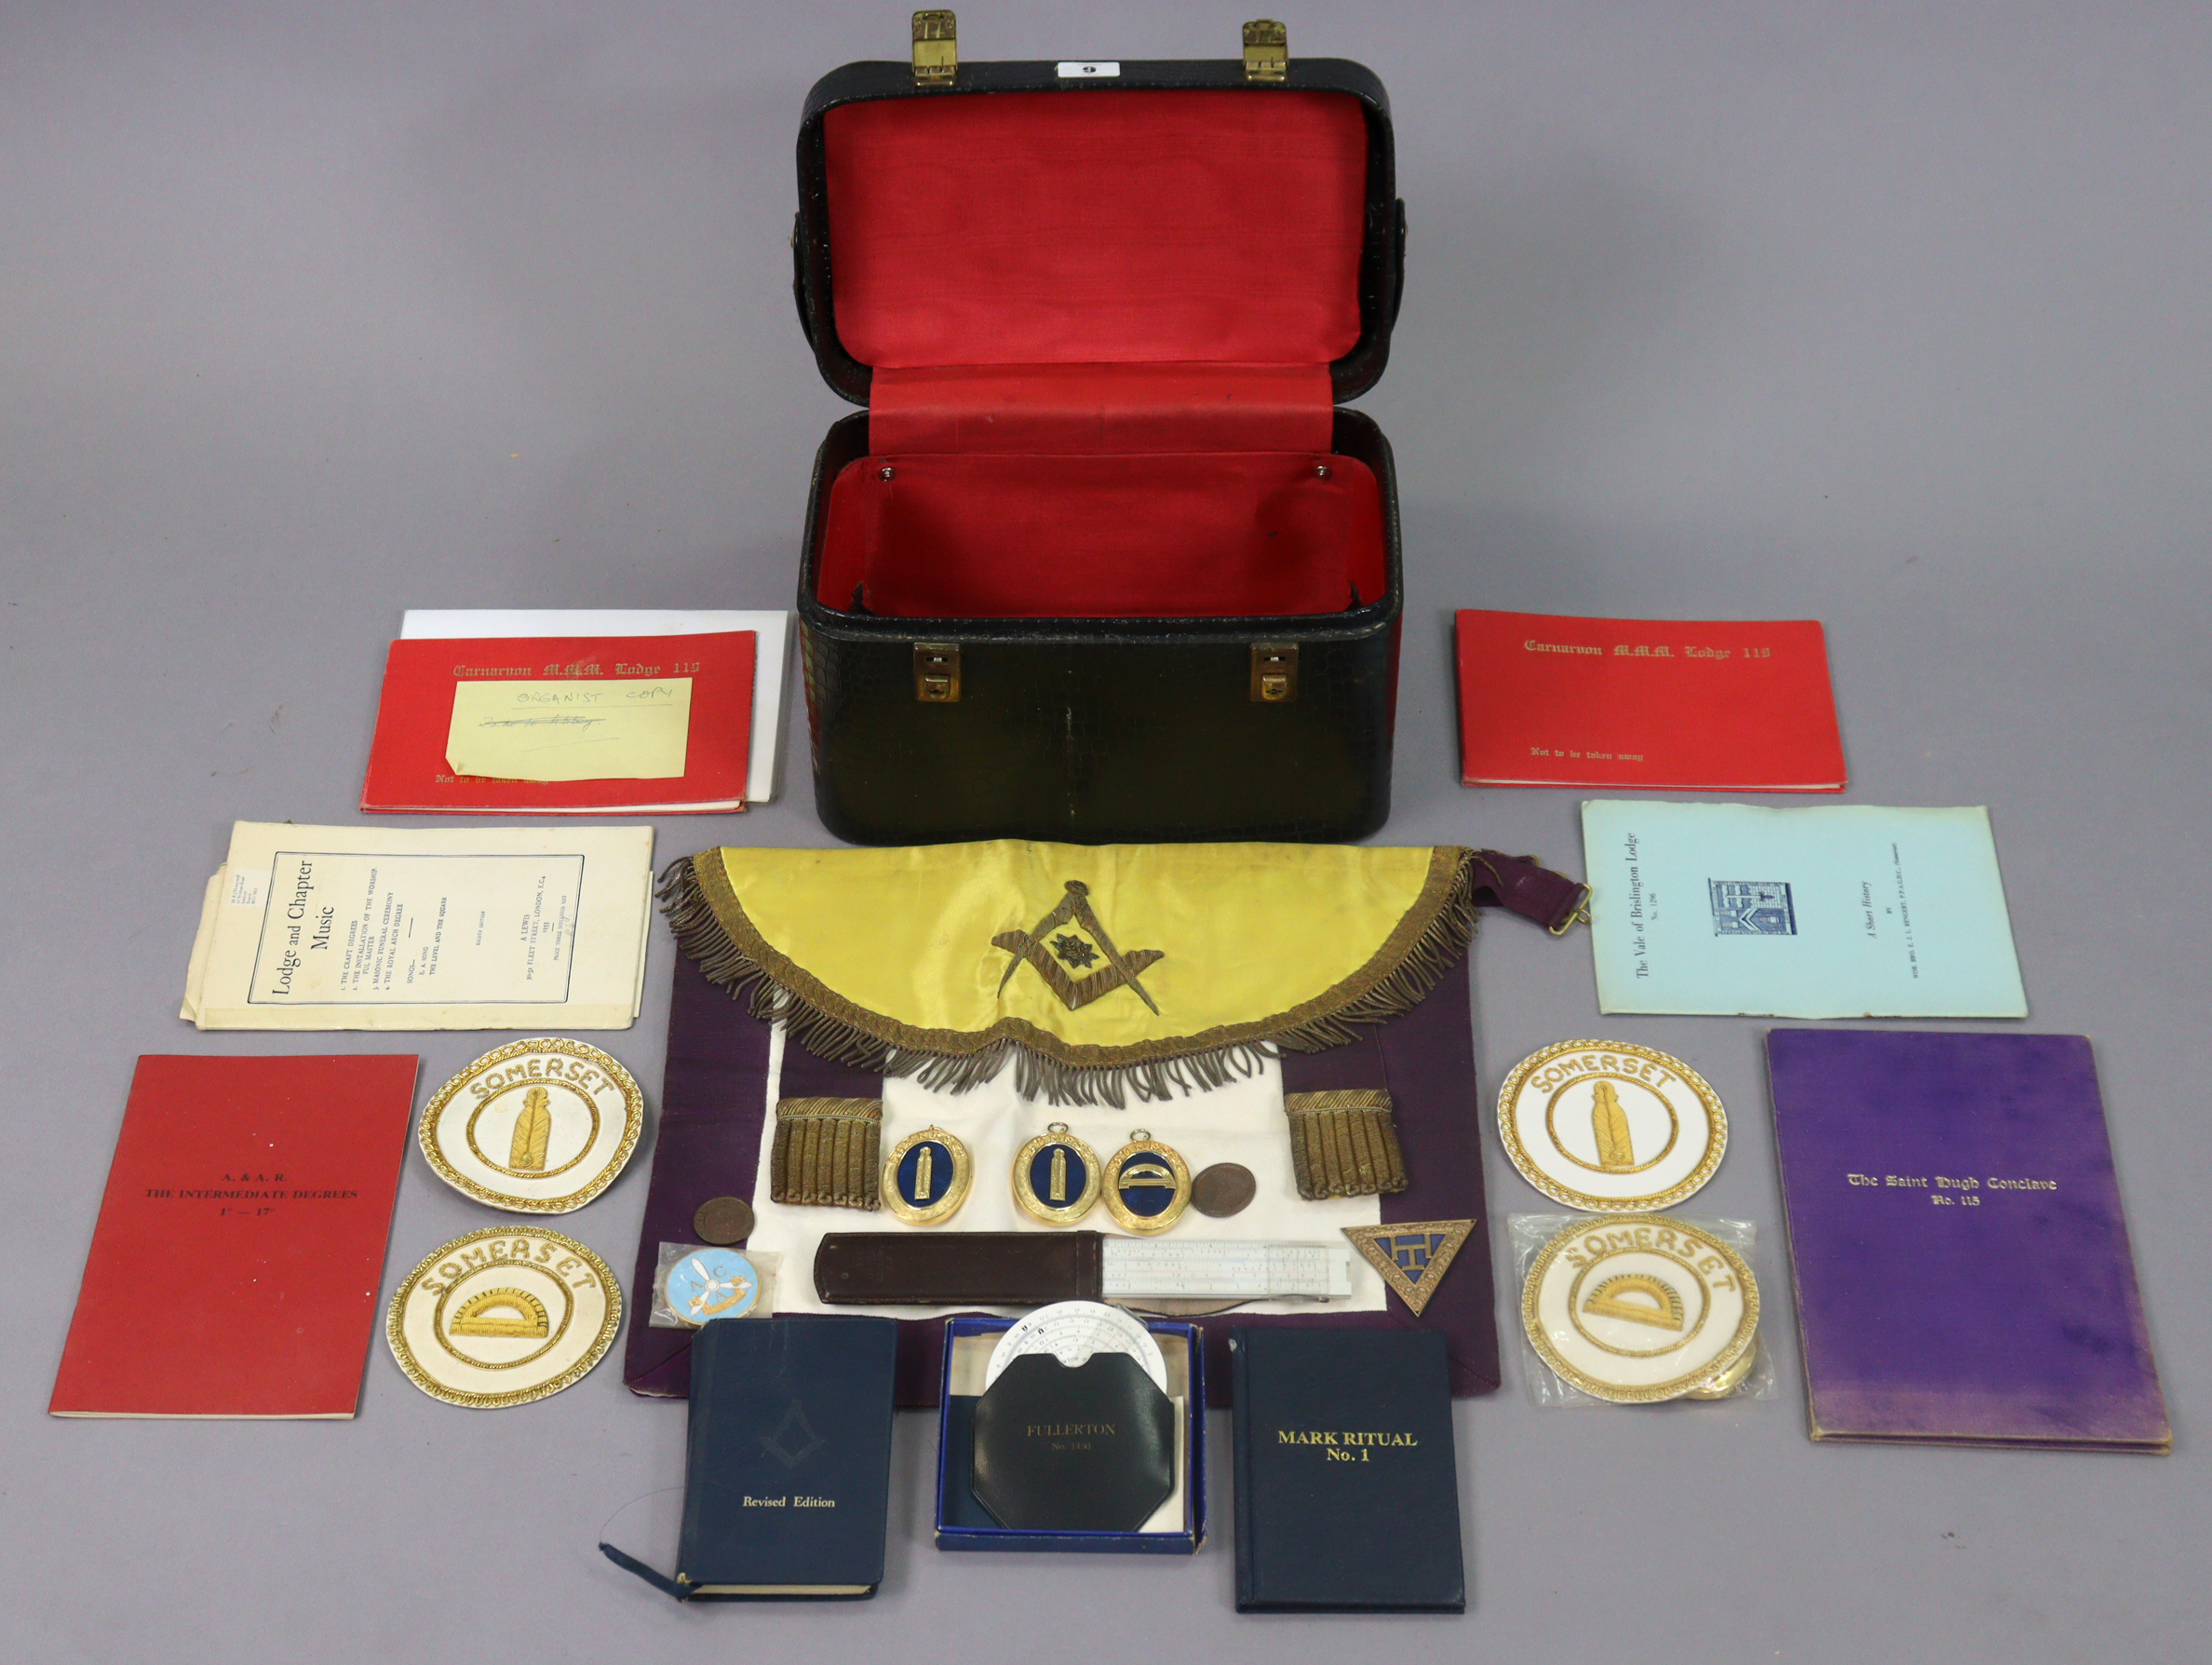 A Masonic regalia apron; & various ditto embroidered cloth badges, books, etc.